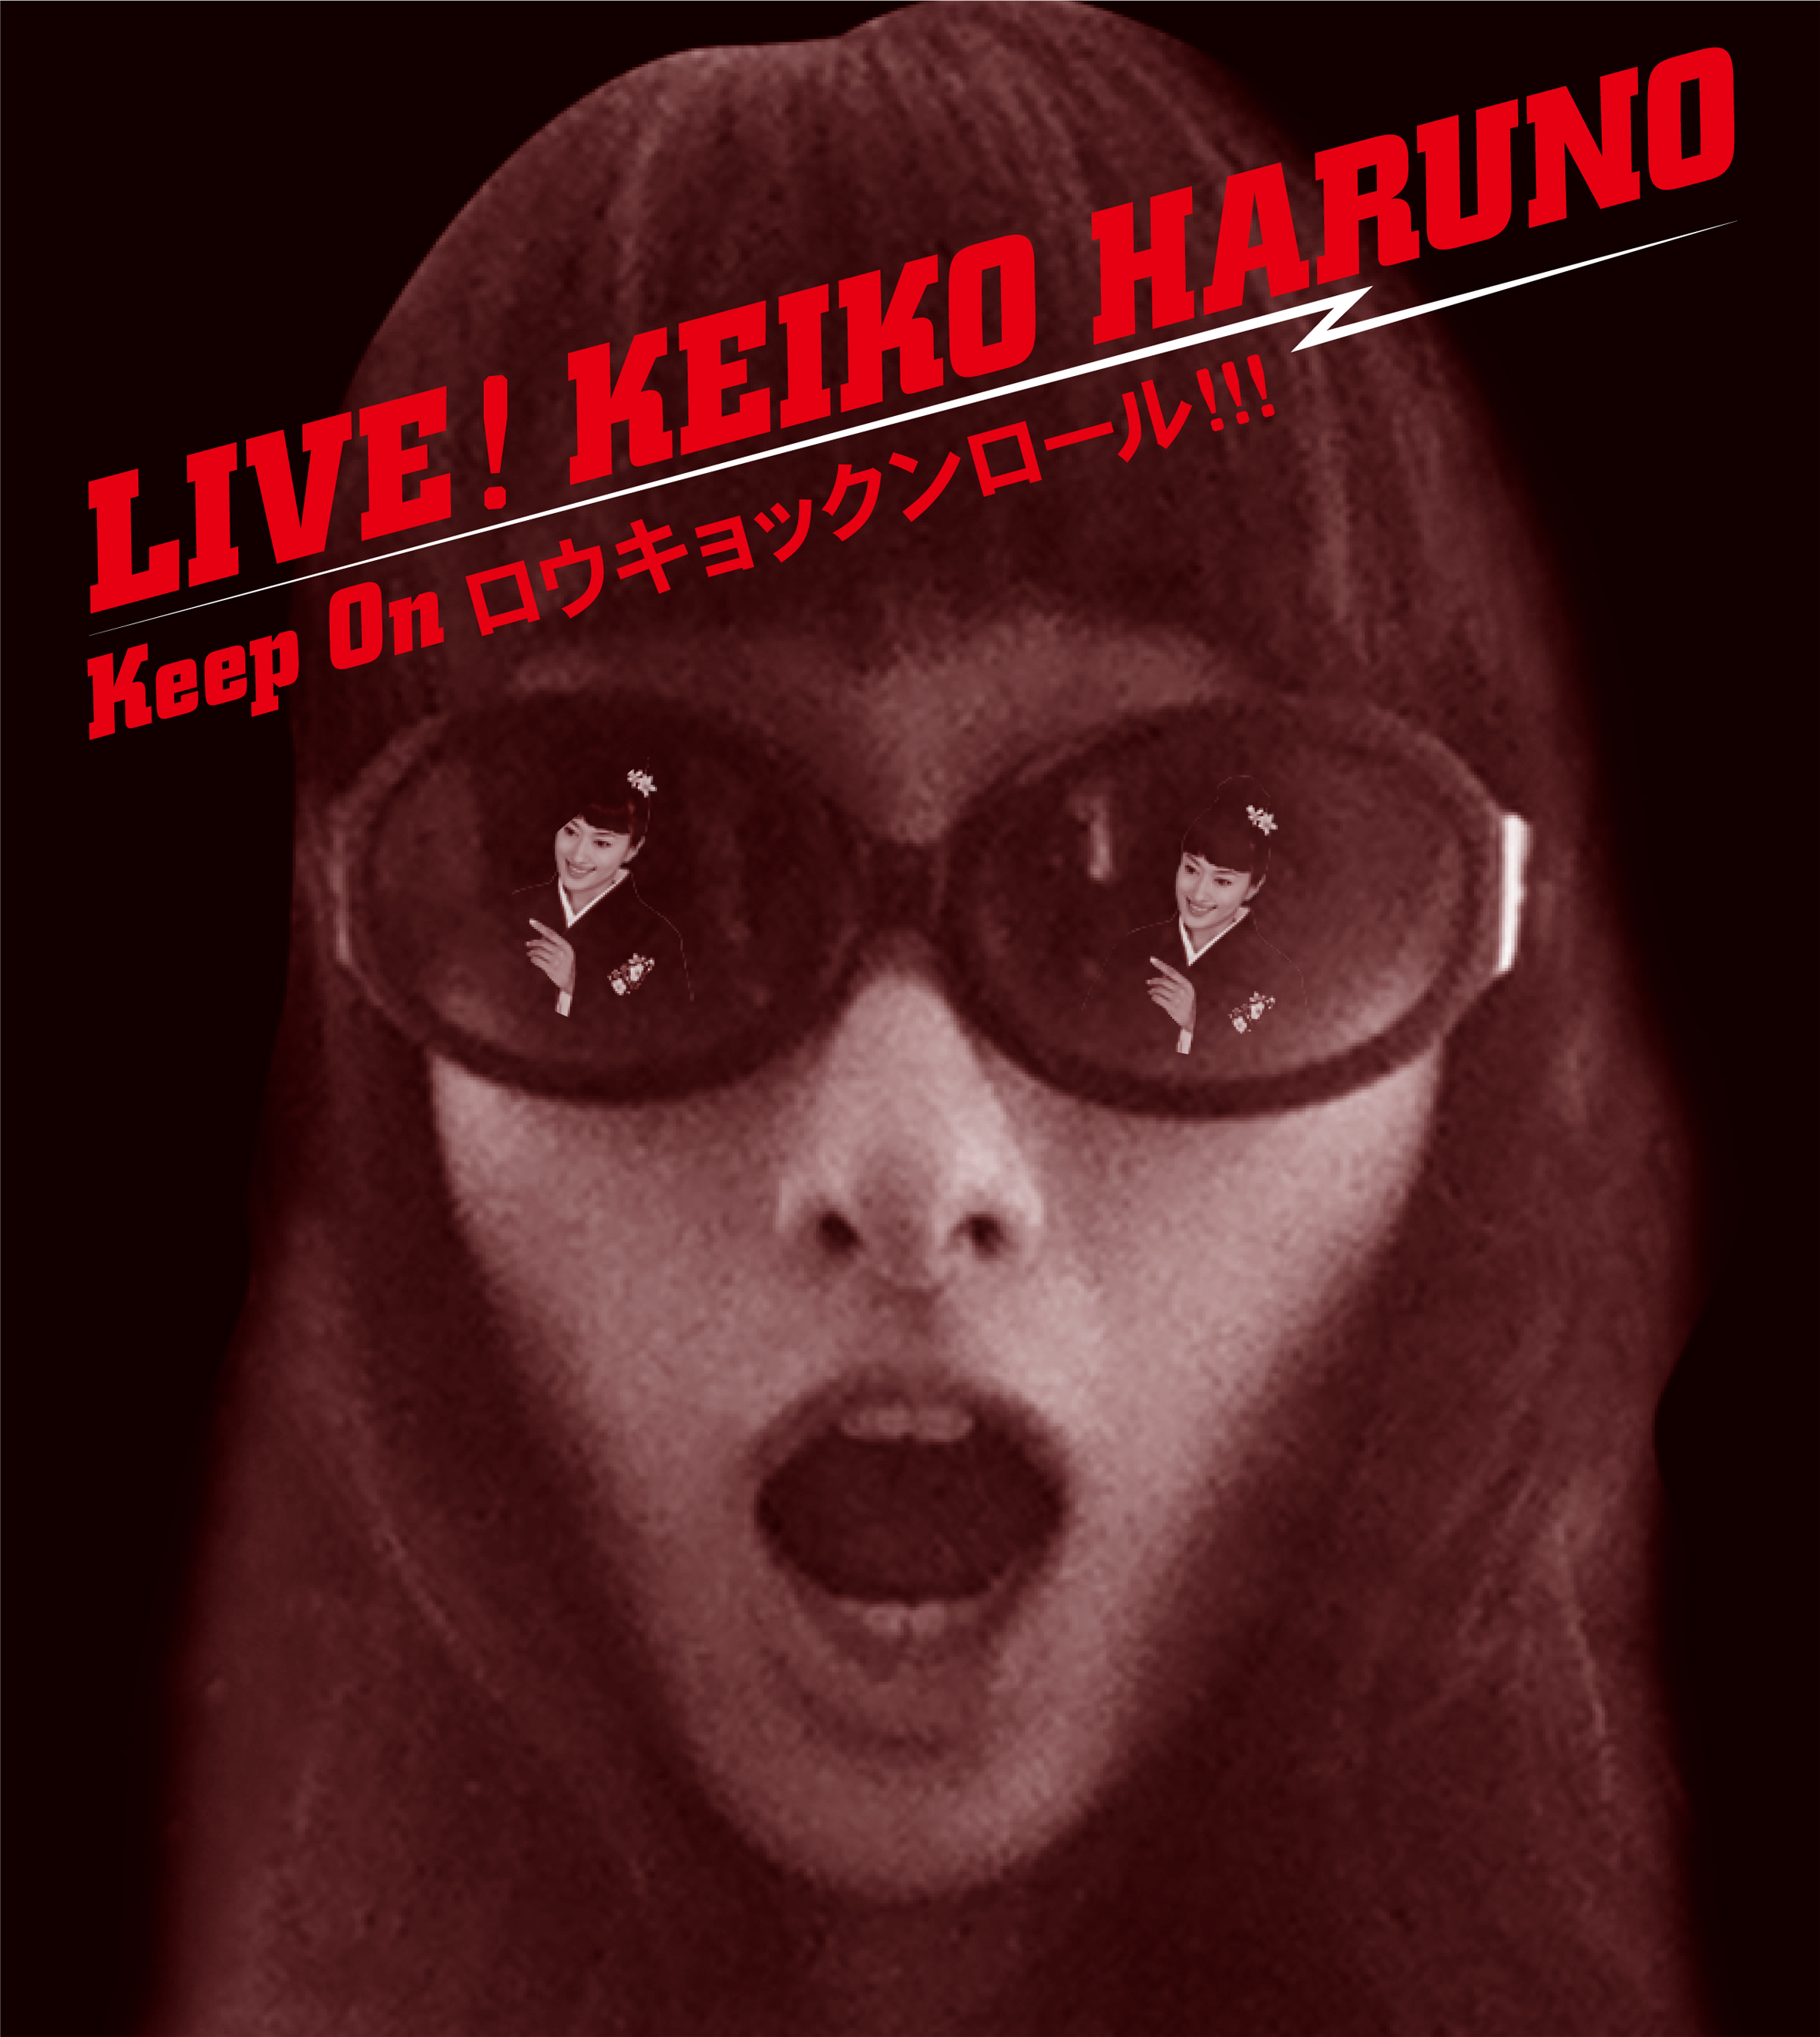 "LIVE！KEIKO HARUNO Keep On ロウキョックンロール!!!"